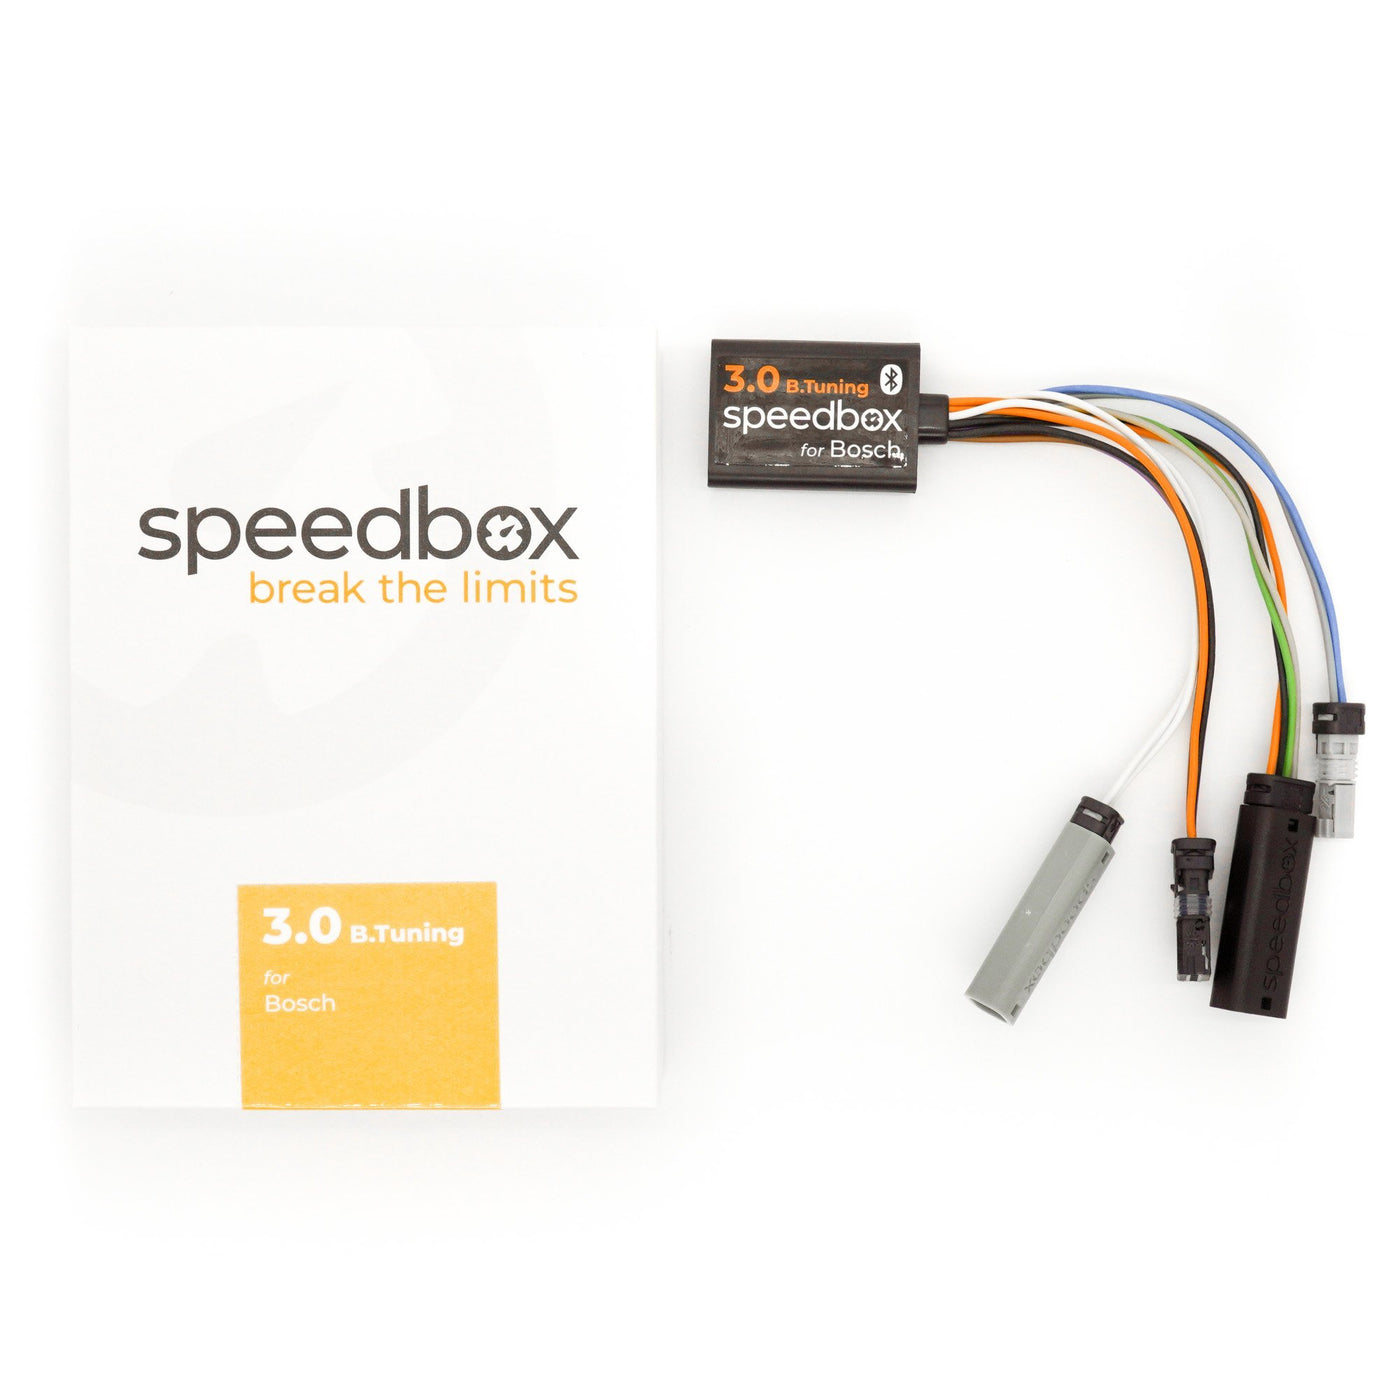 SPEEDBOX 3.0 for Bosch EBikes Tuning kit for Bosch Motors 2014-2020.